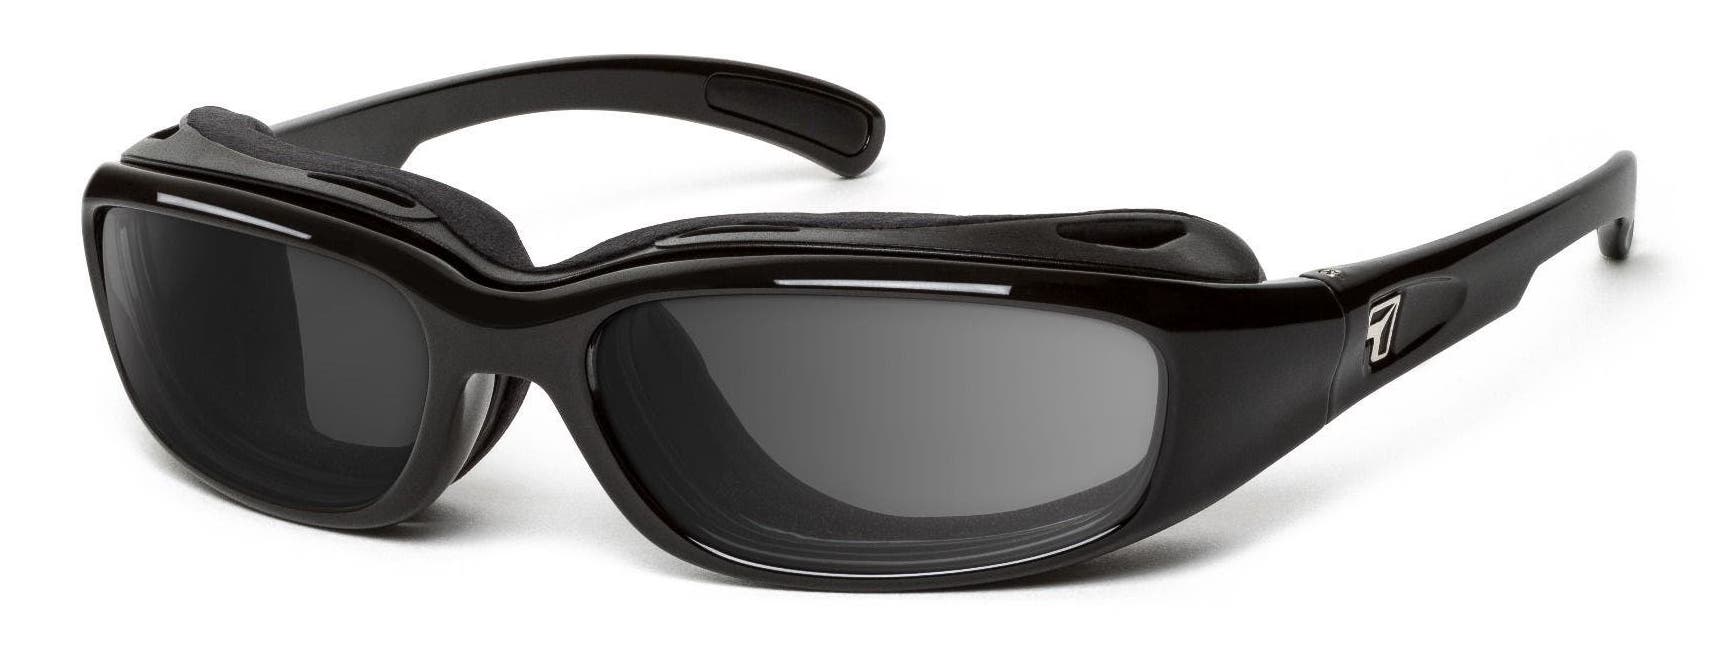 7Eye Churada motorcycle sunglasses in glossy black with grey lenses and foam eyecup.